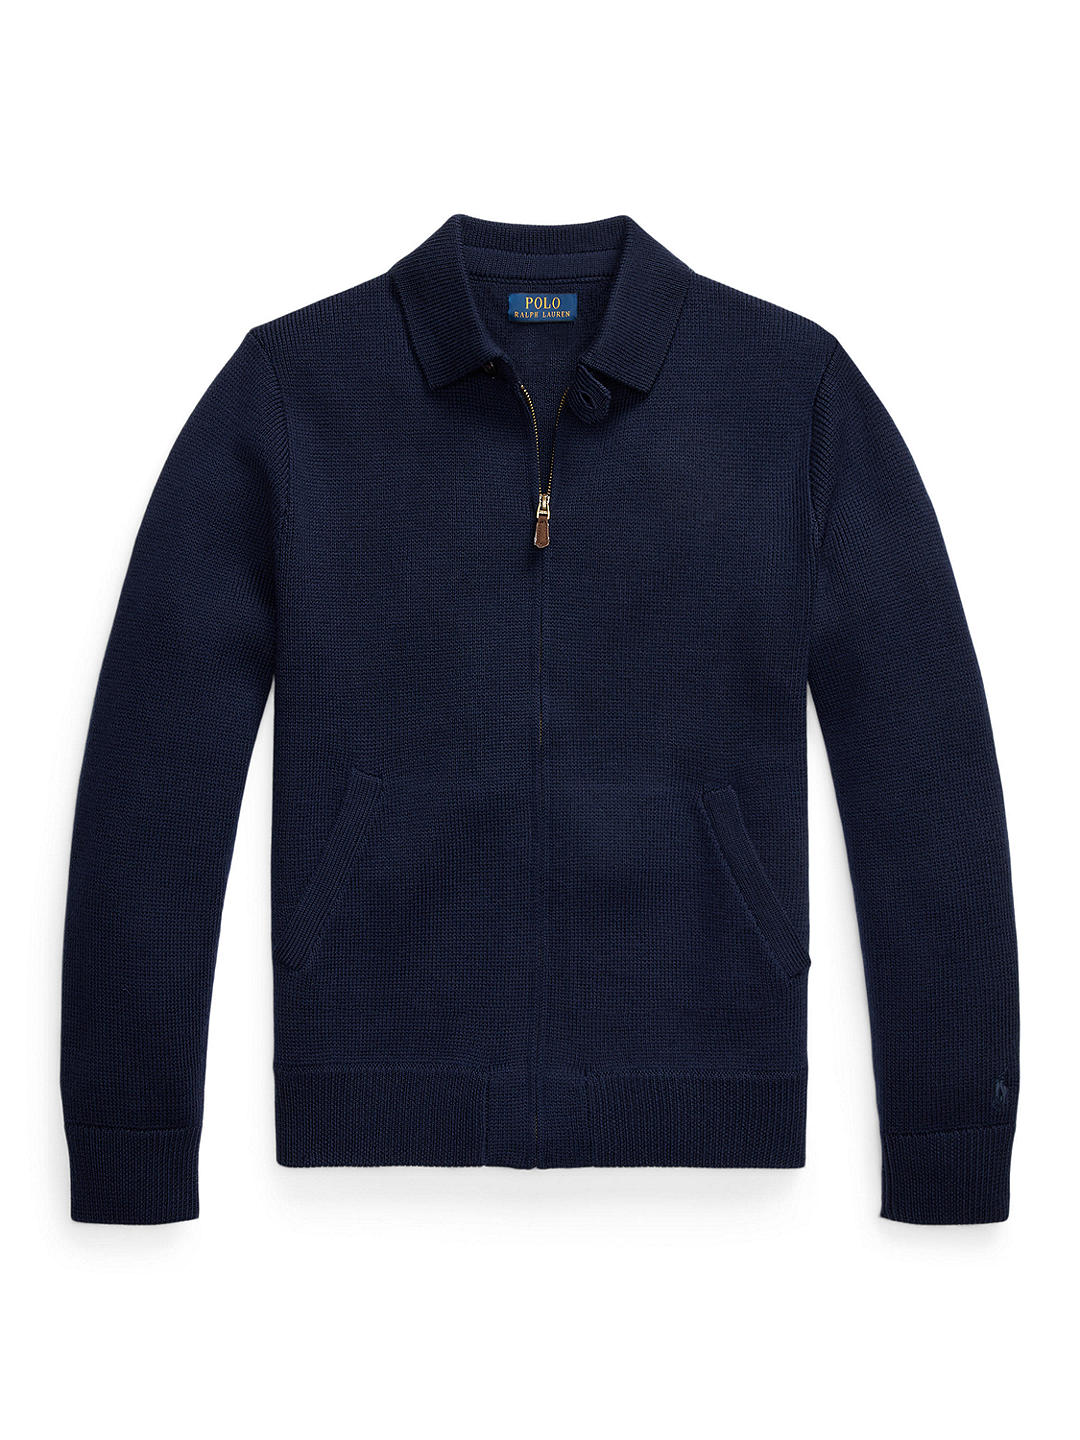 Polo Ralph Lauren Wool Full-Zip Sweater, Hunter Navy